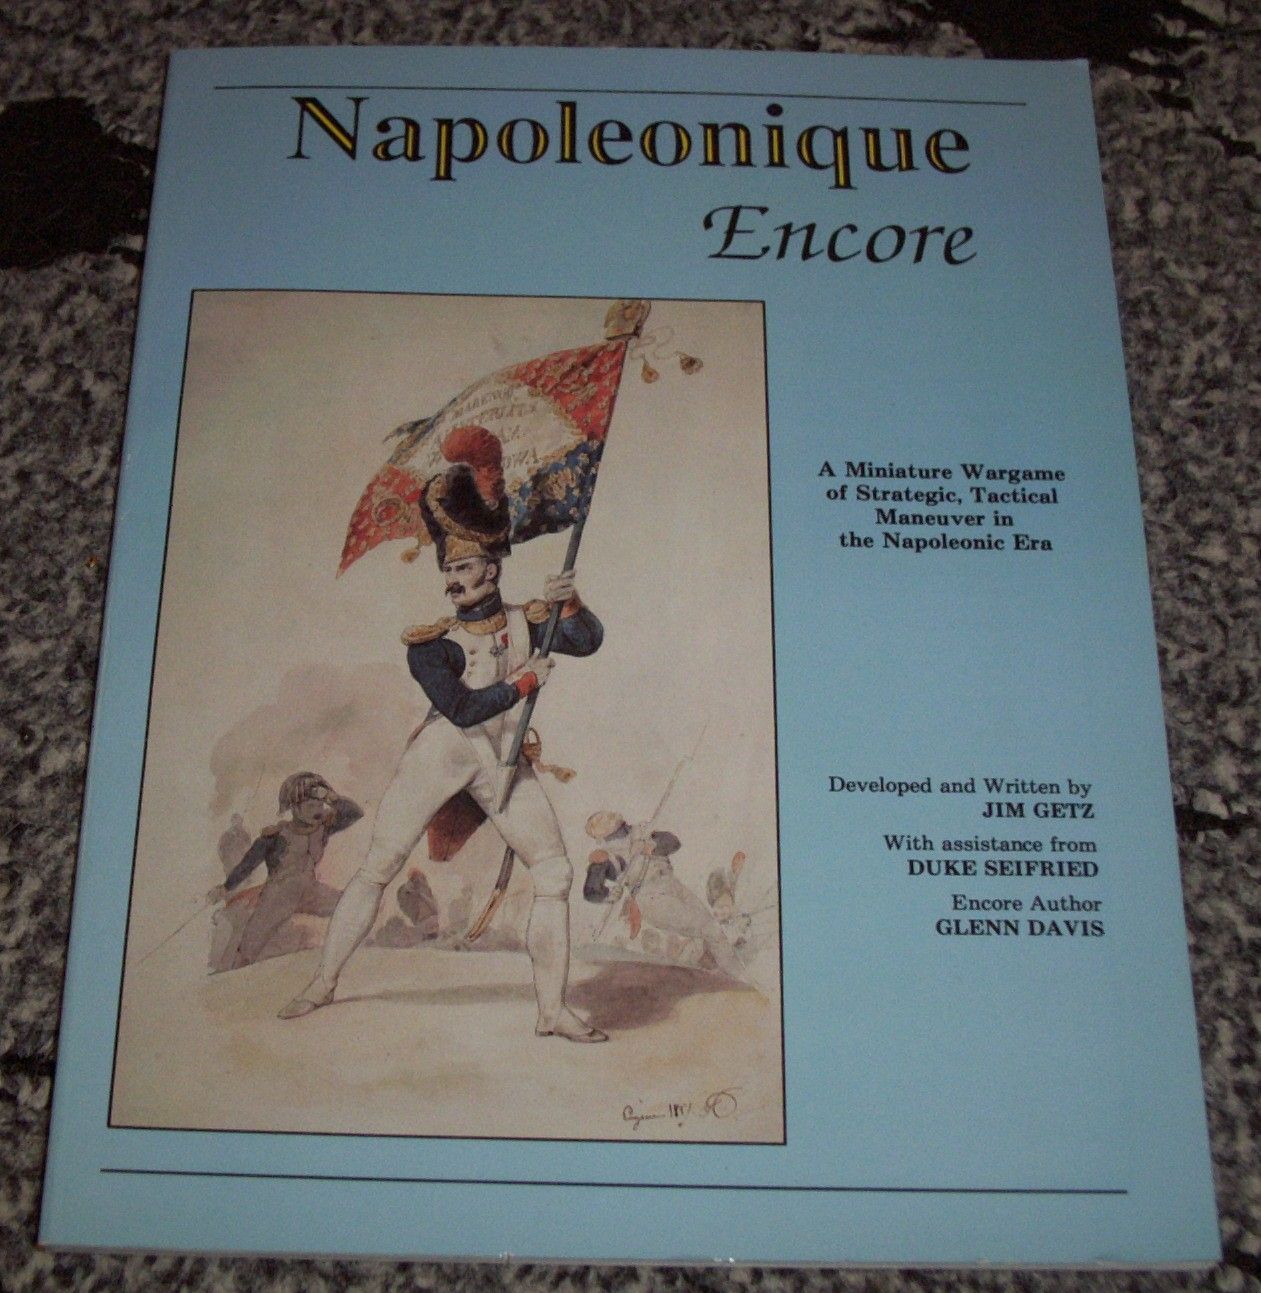 Napoleonique